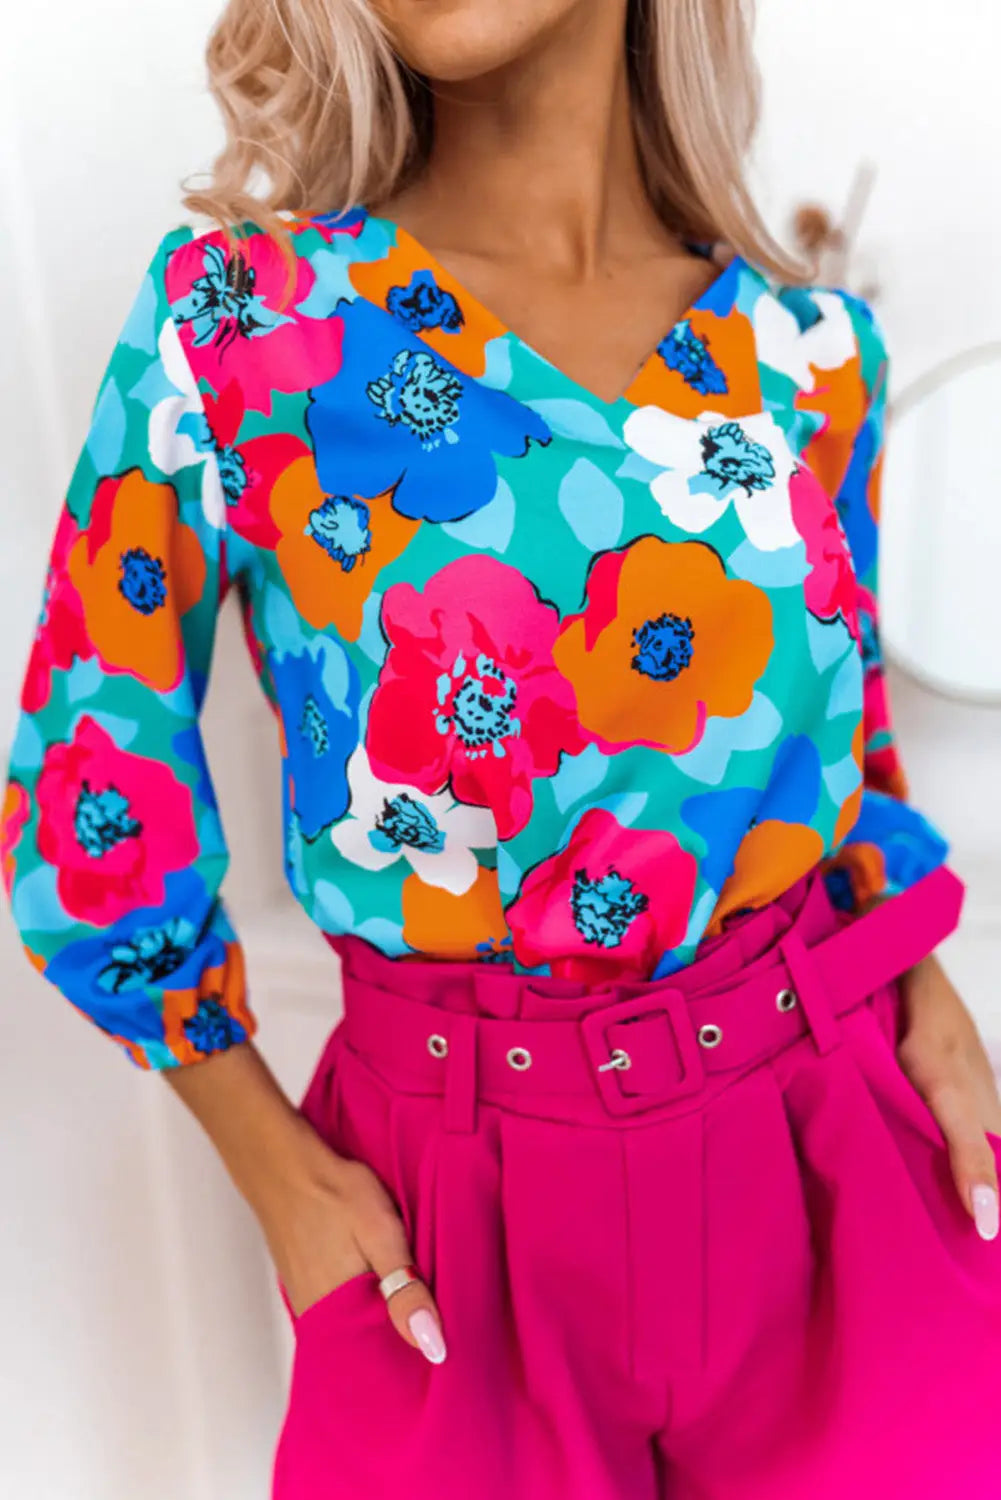 Rose split v collar ruffle sleeve floral shift dress - multicolor1 / s / 100% polyester - dresses